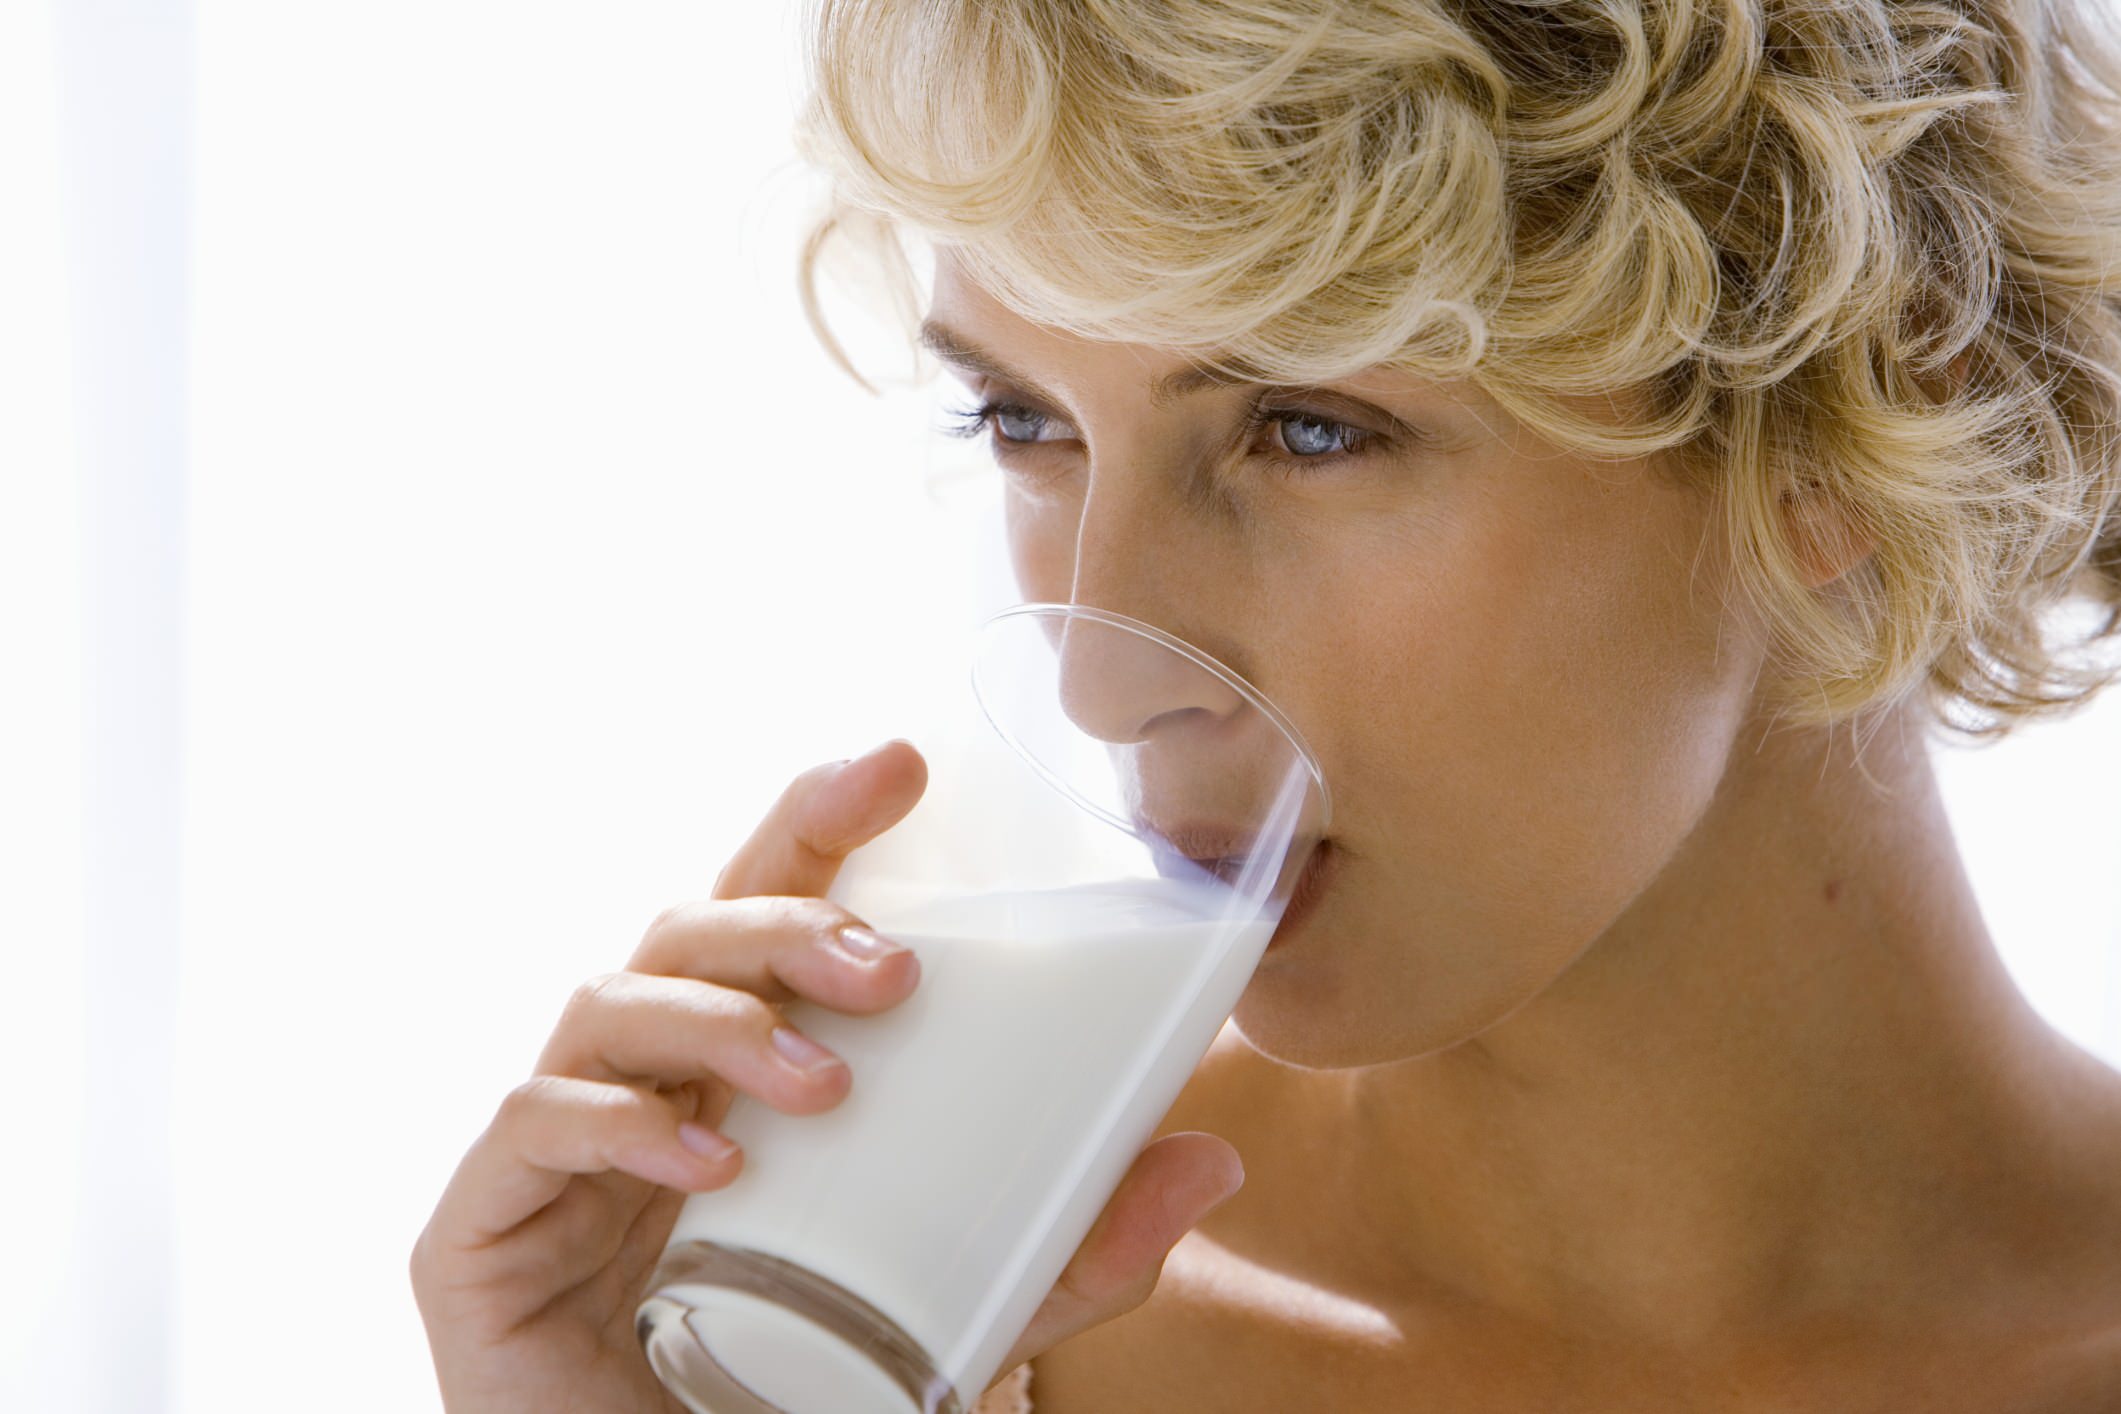 Пьет молоко на английском. Пьет молоко. Женщина пьет молоко. Девушка с молоком. Человек пьет молоко.